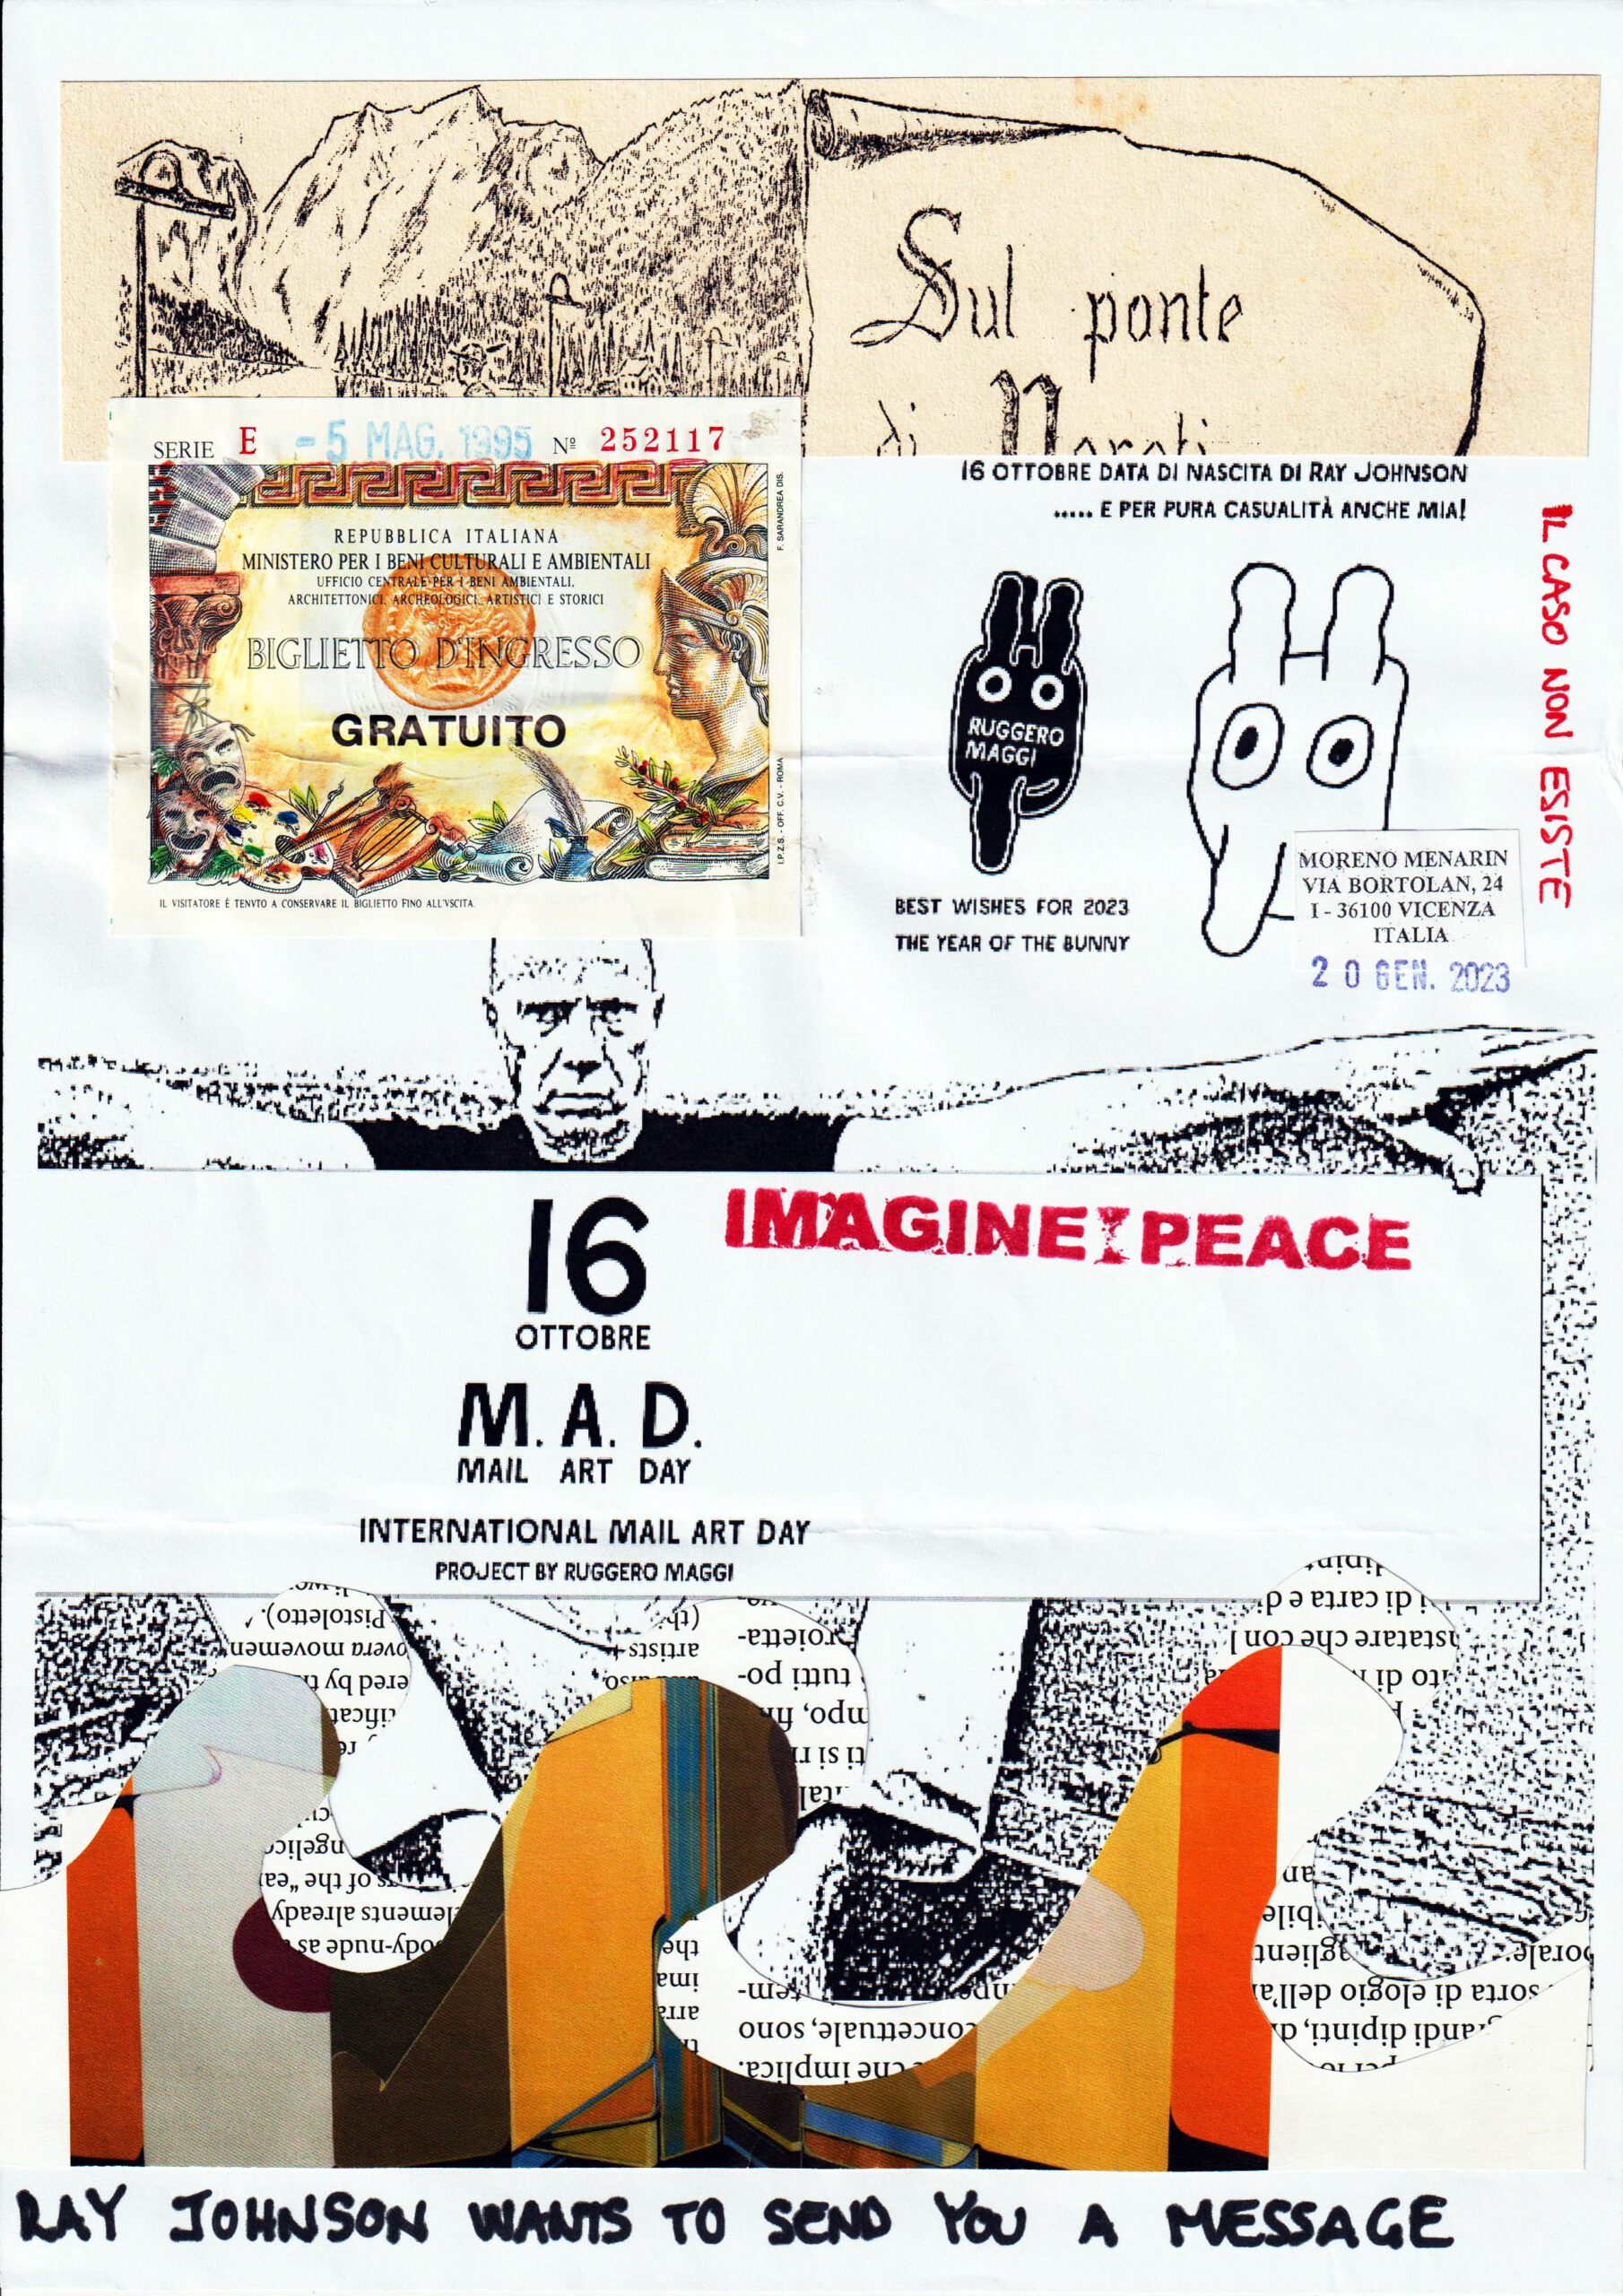 M.A.D. - Mail Art Day: Gioli Paolo + Moreno Menarin, Italy